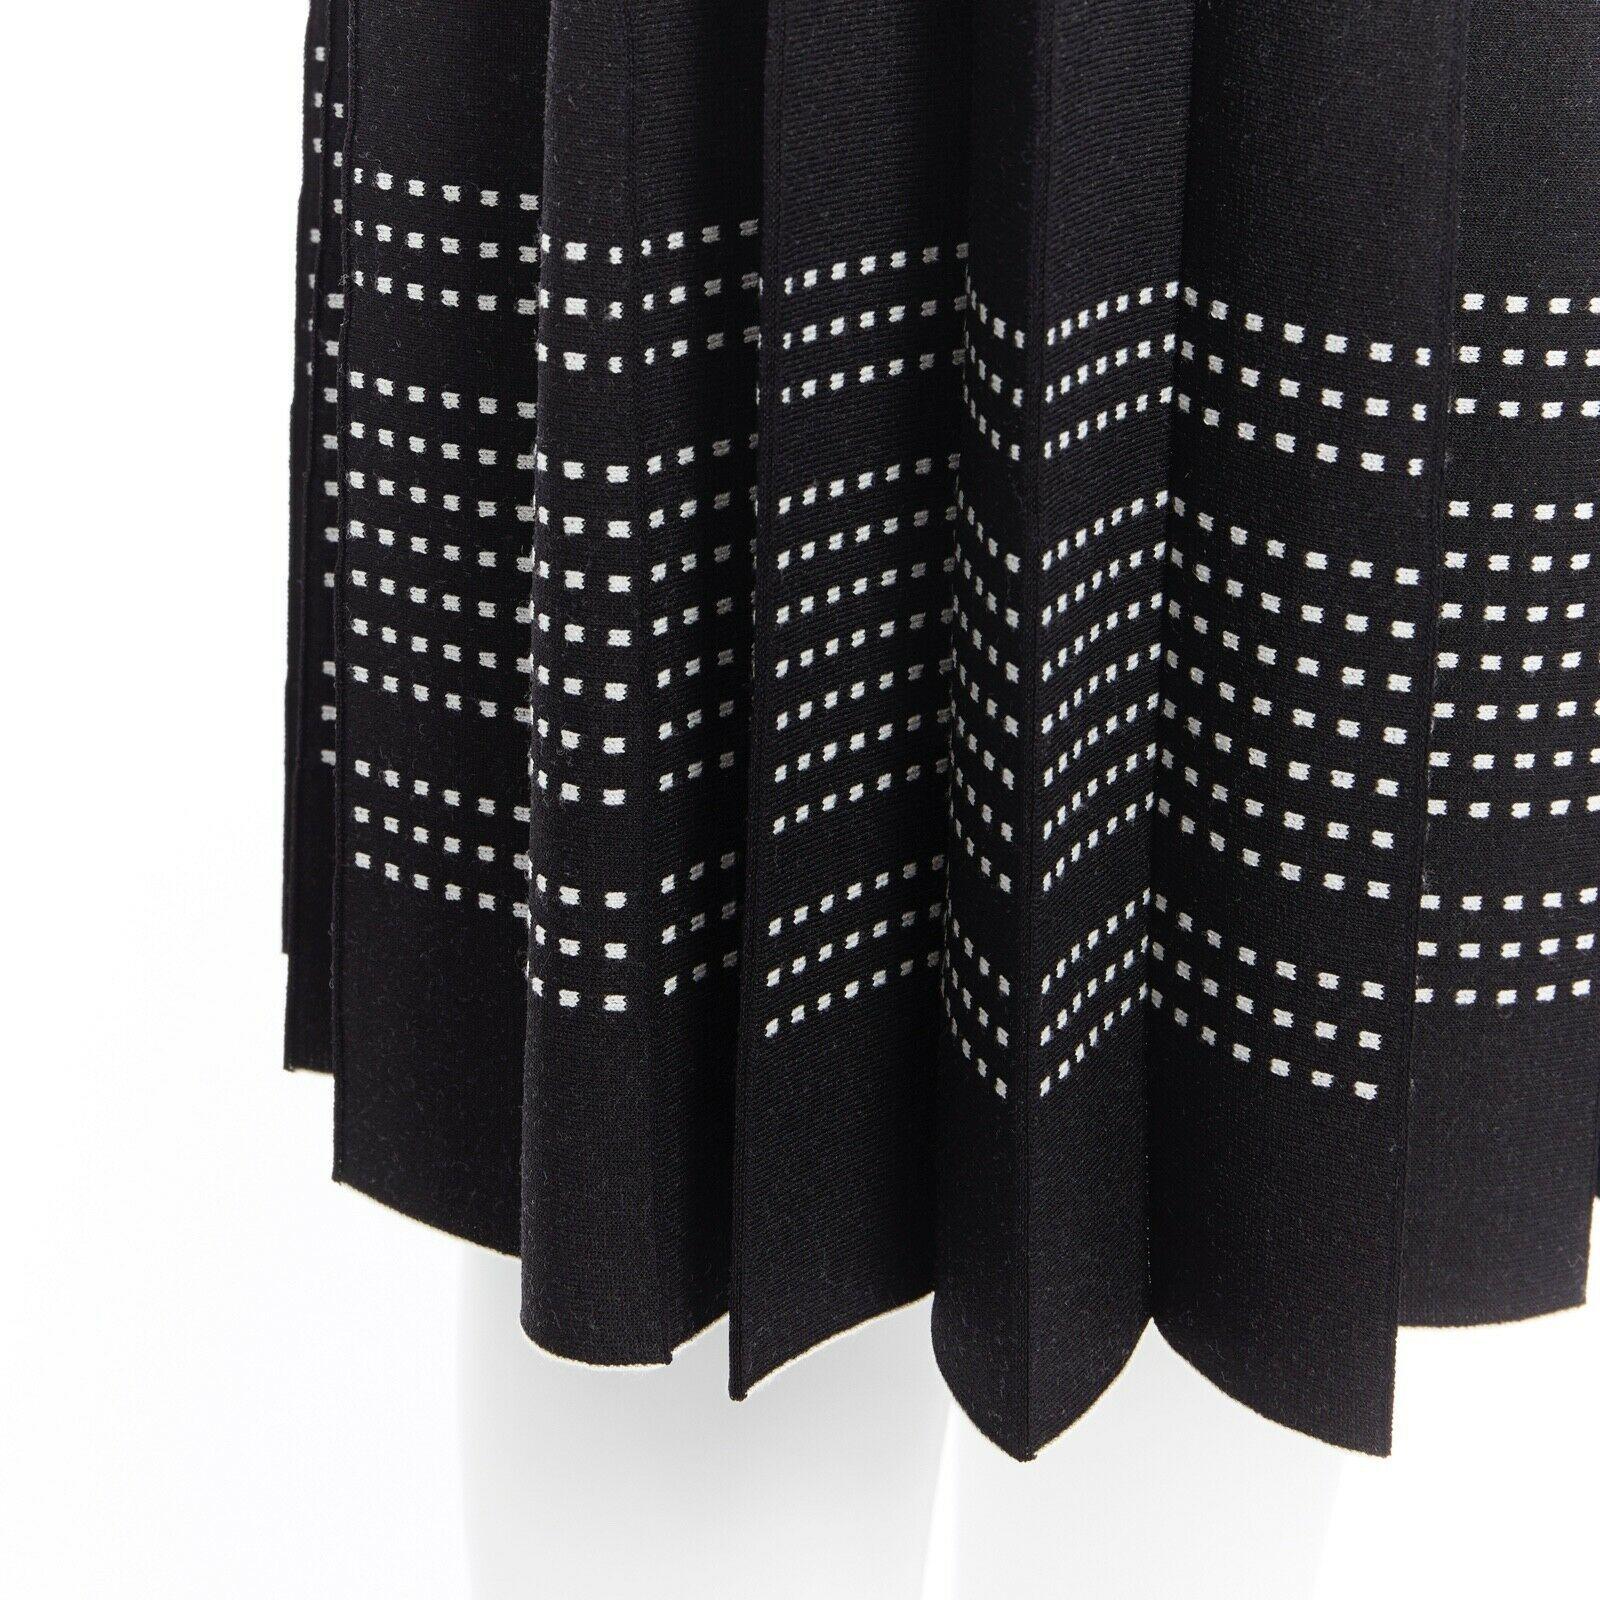 ALEXANDER MCQUEEN black white dot jacquard knit pleated flare midi skirt  IT42 M